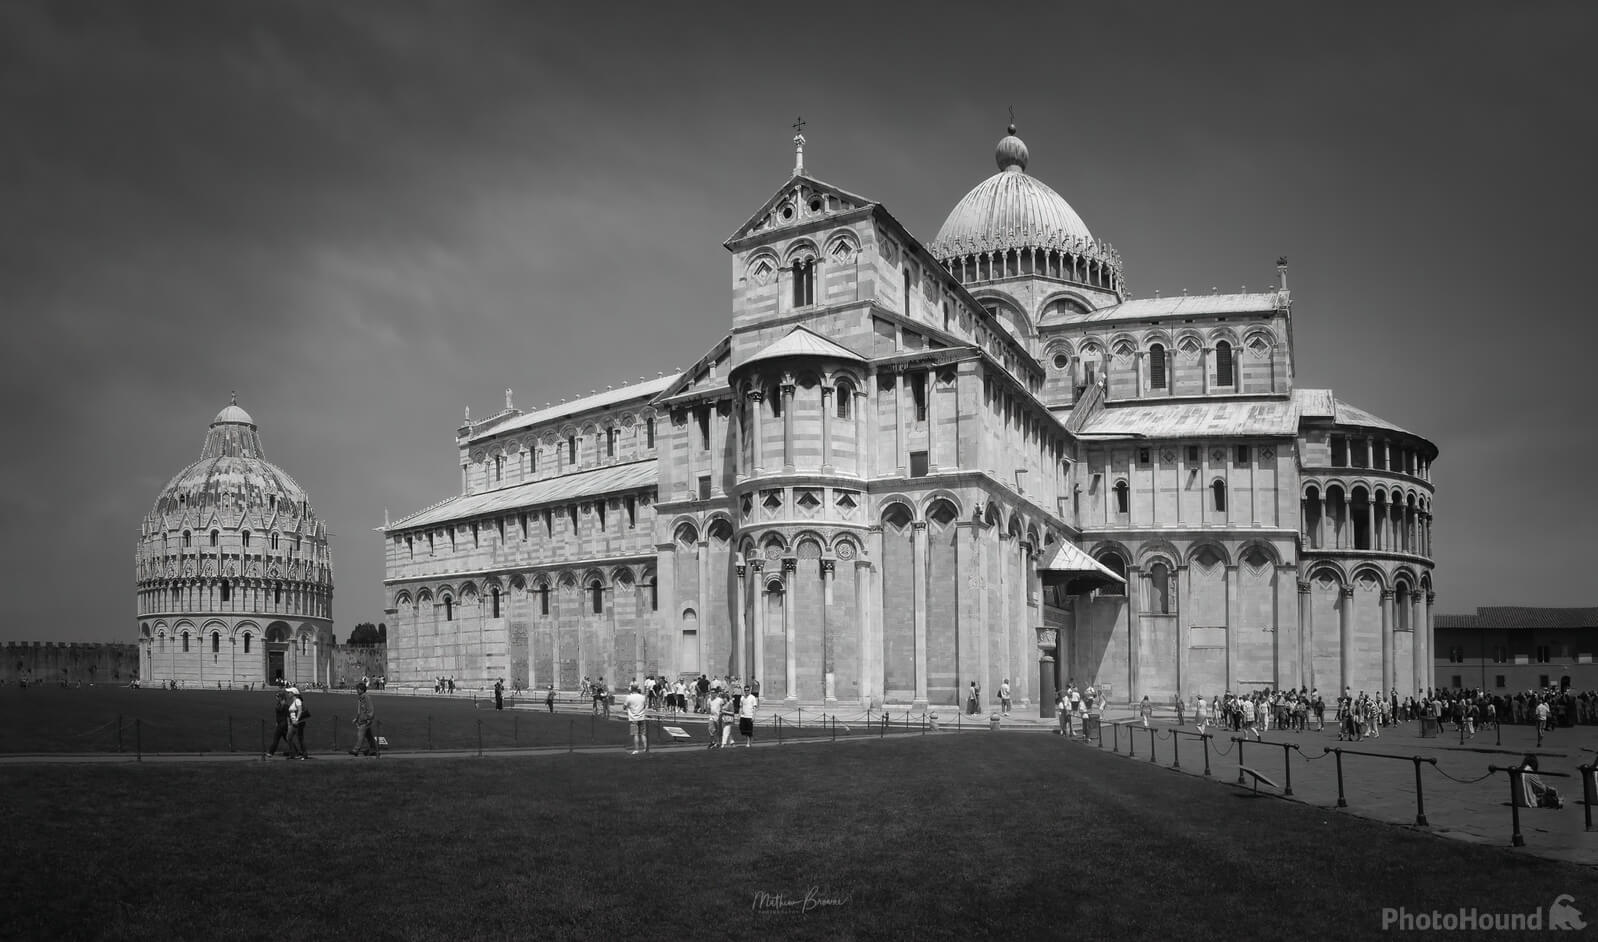 Image of Piazza del Duomo, Pisa by Mathew Browne